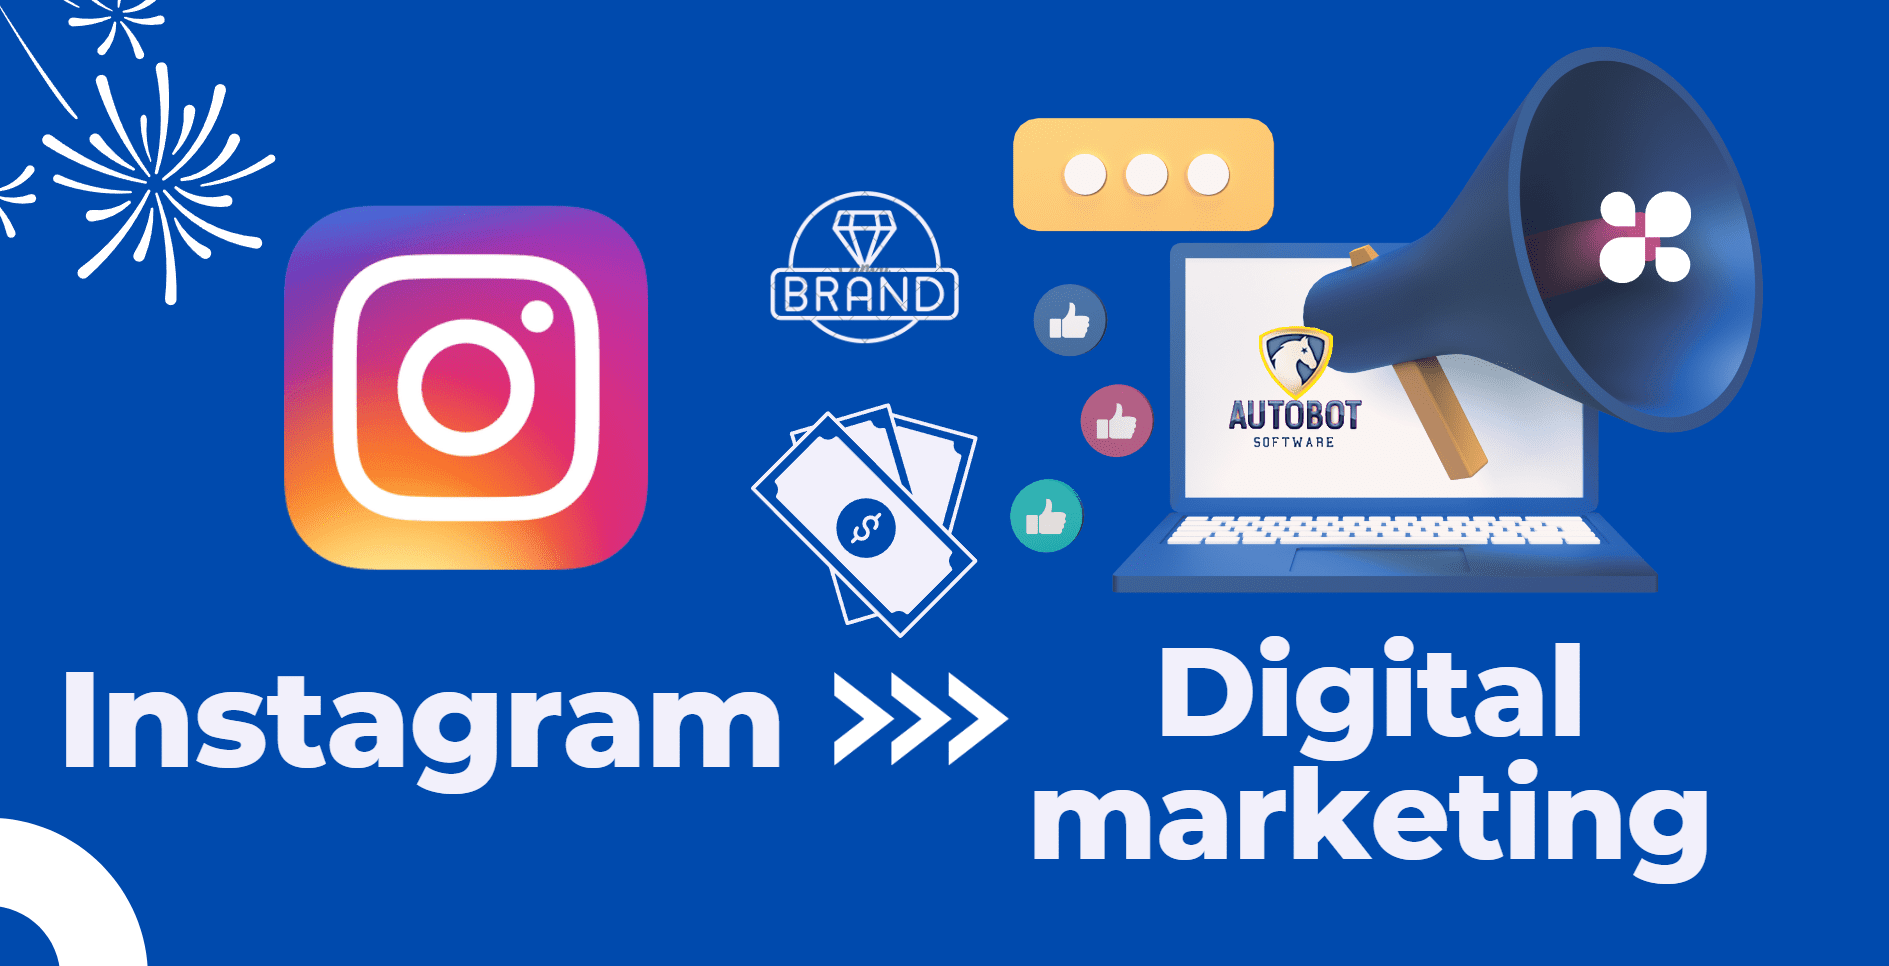 Important role of Instagram in digital marketing